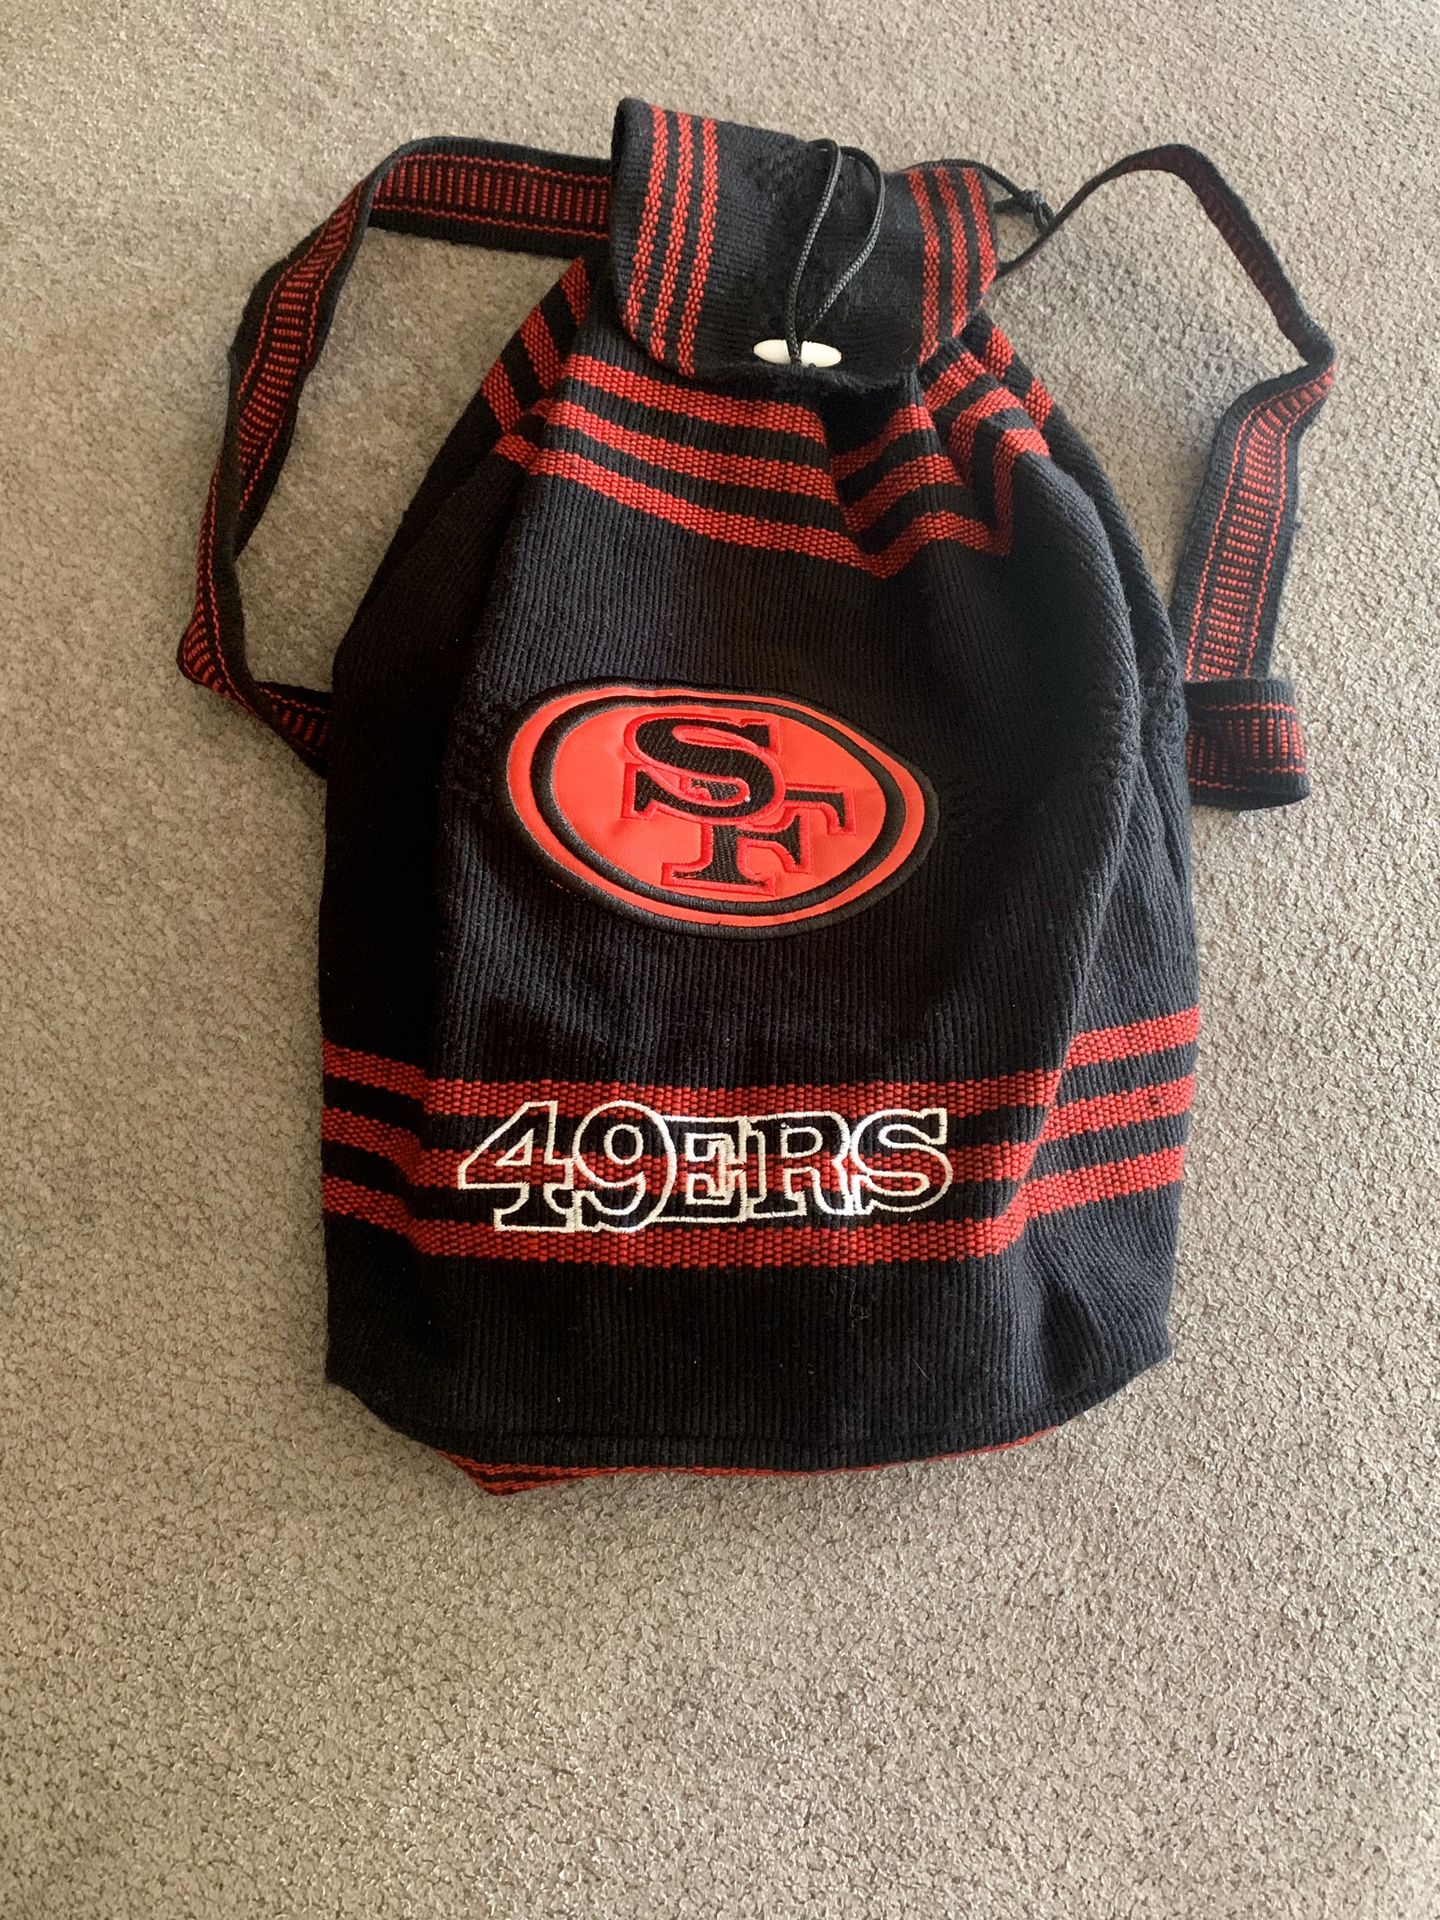 New 49ers bag / backpack